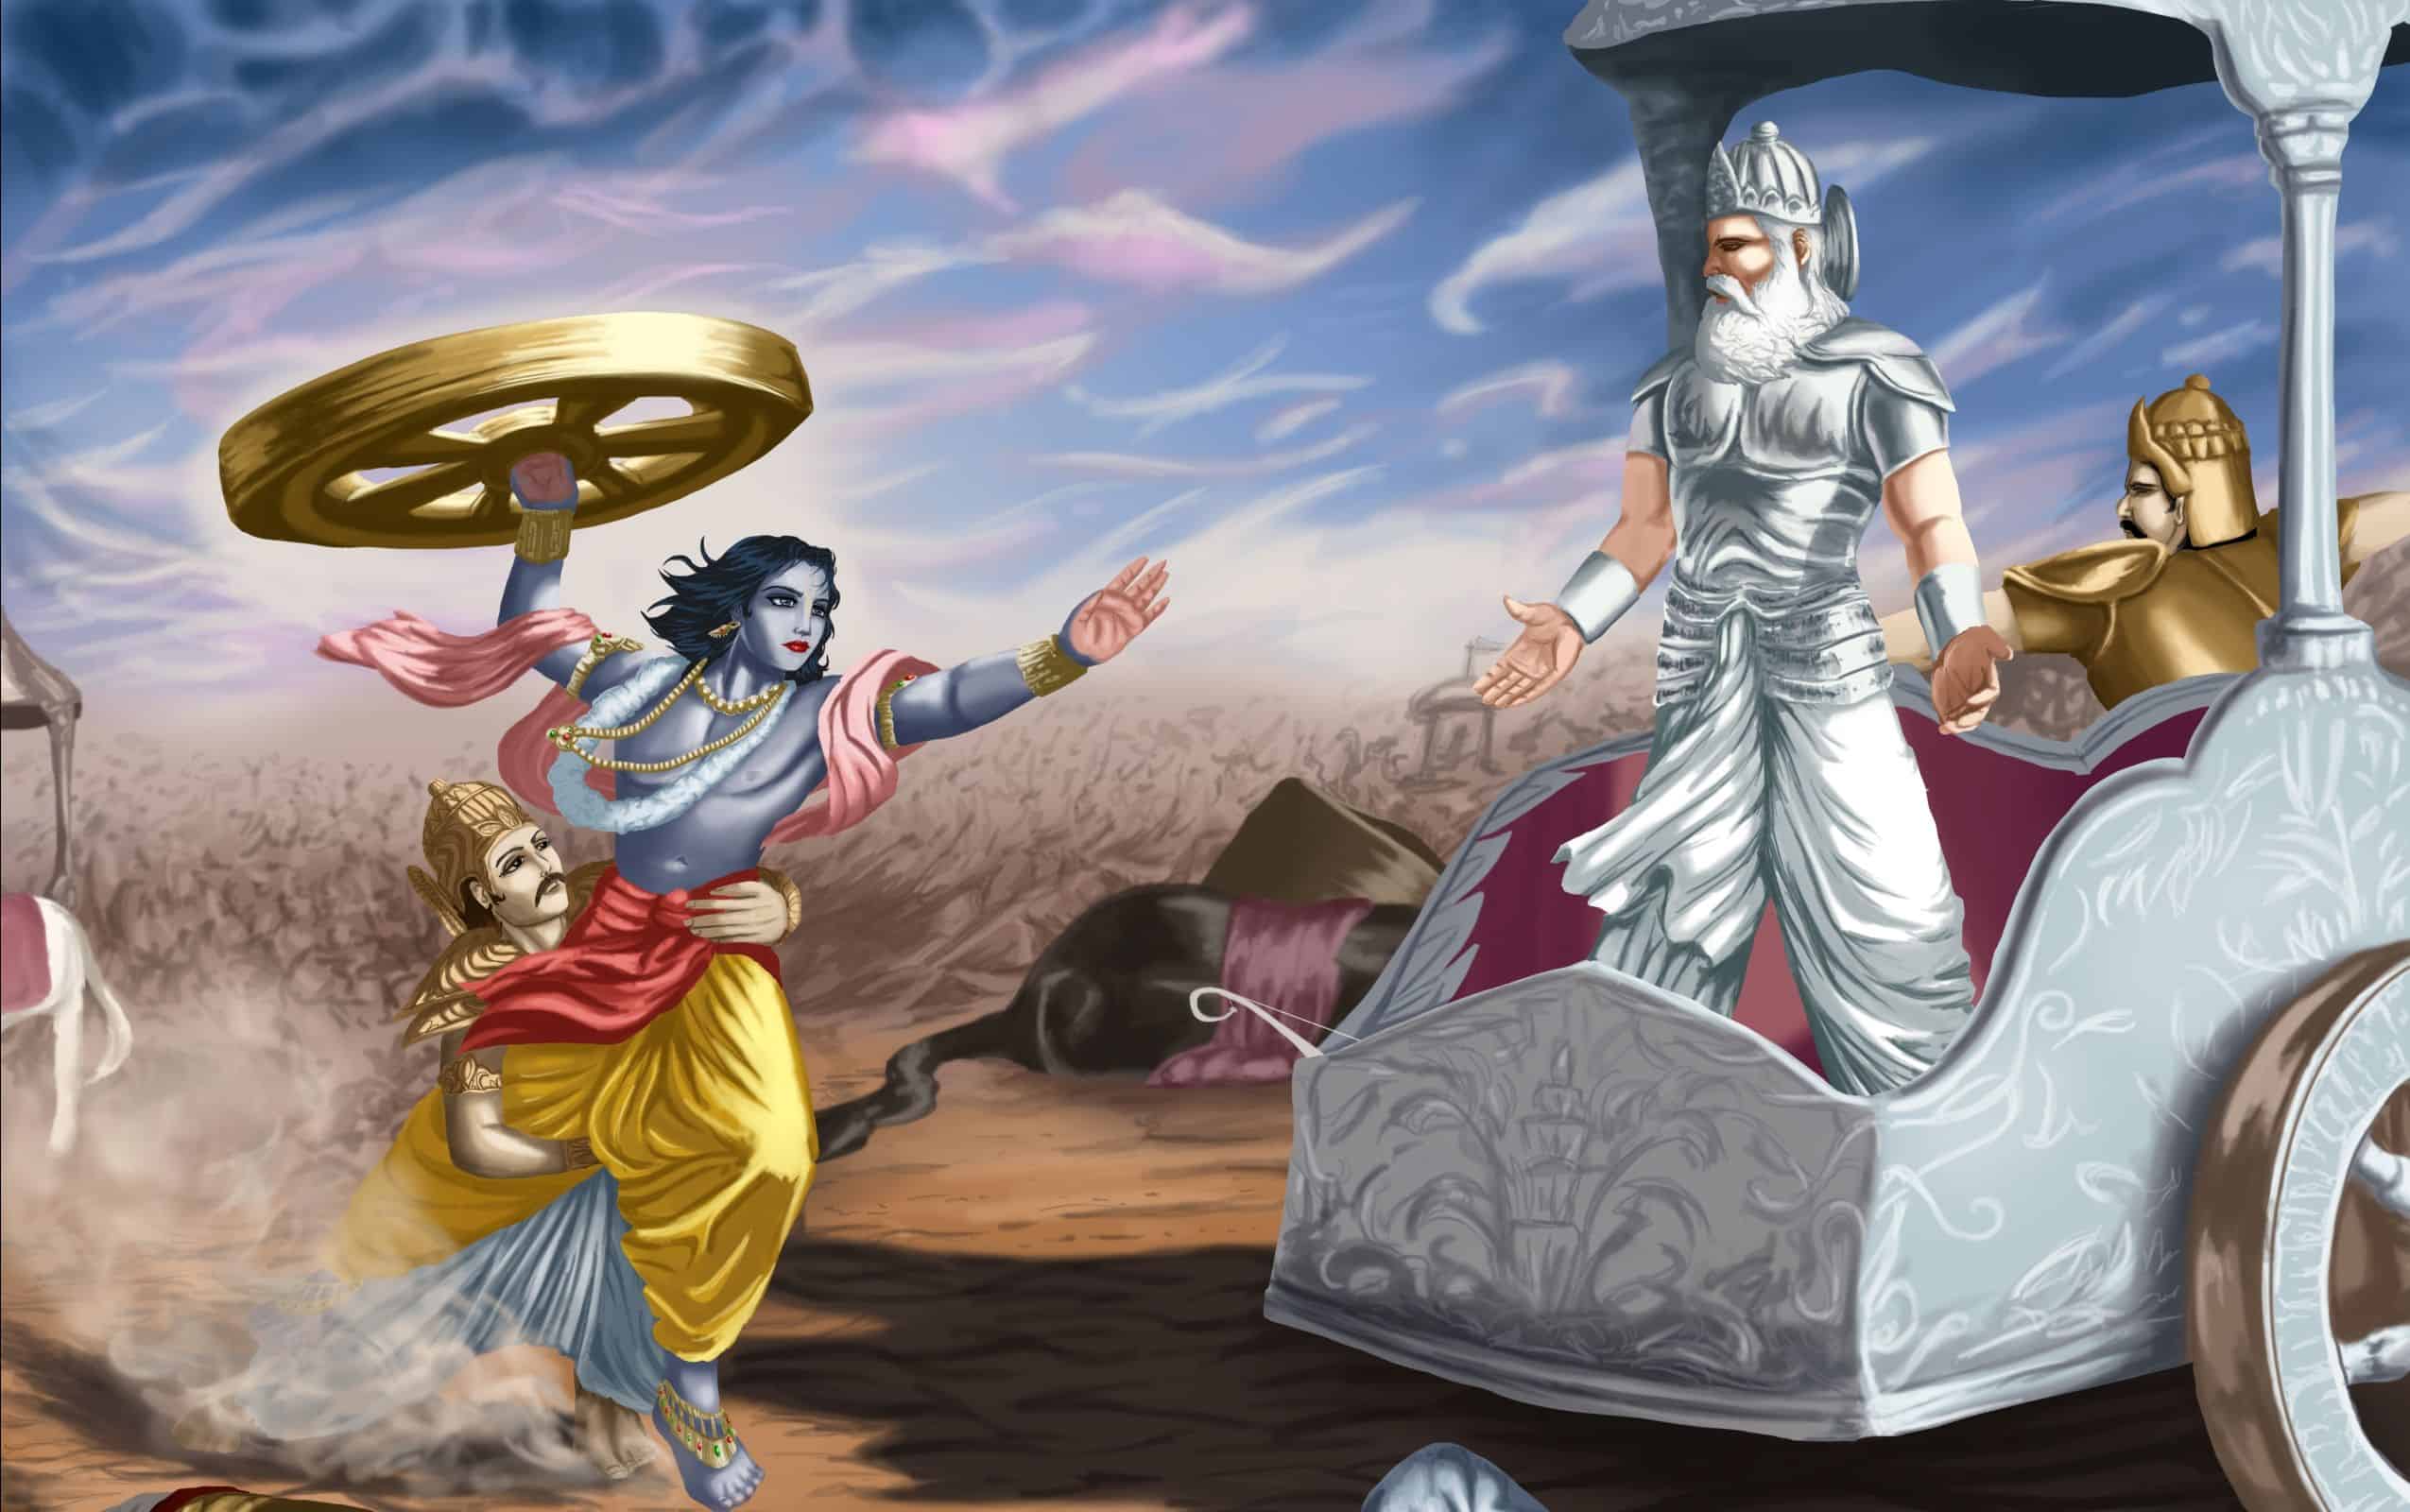 Why was Bhishma so powerful in Mahabharata?